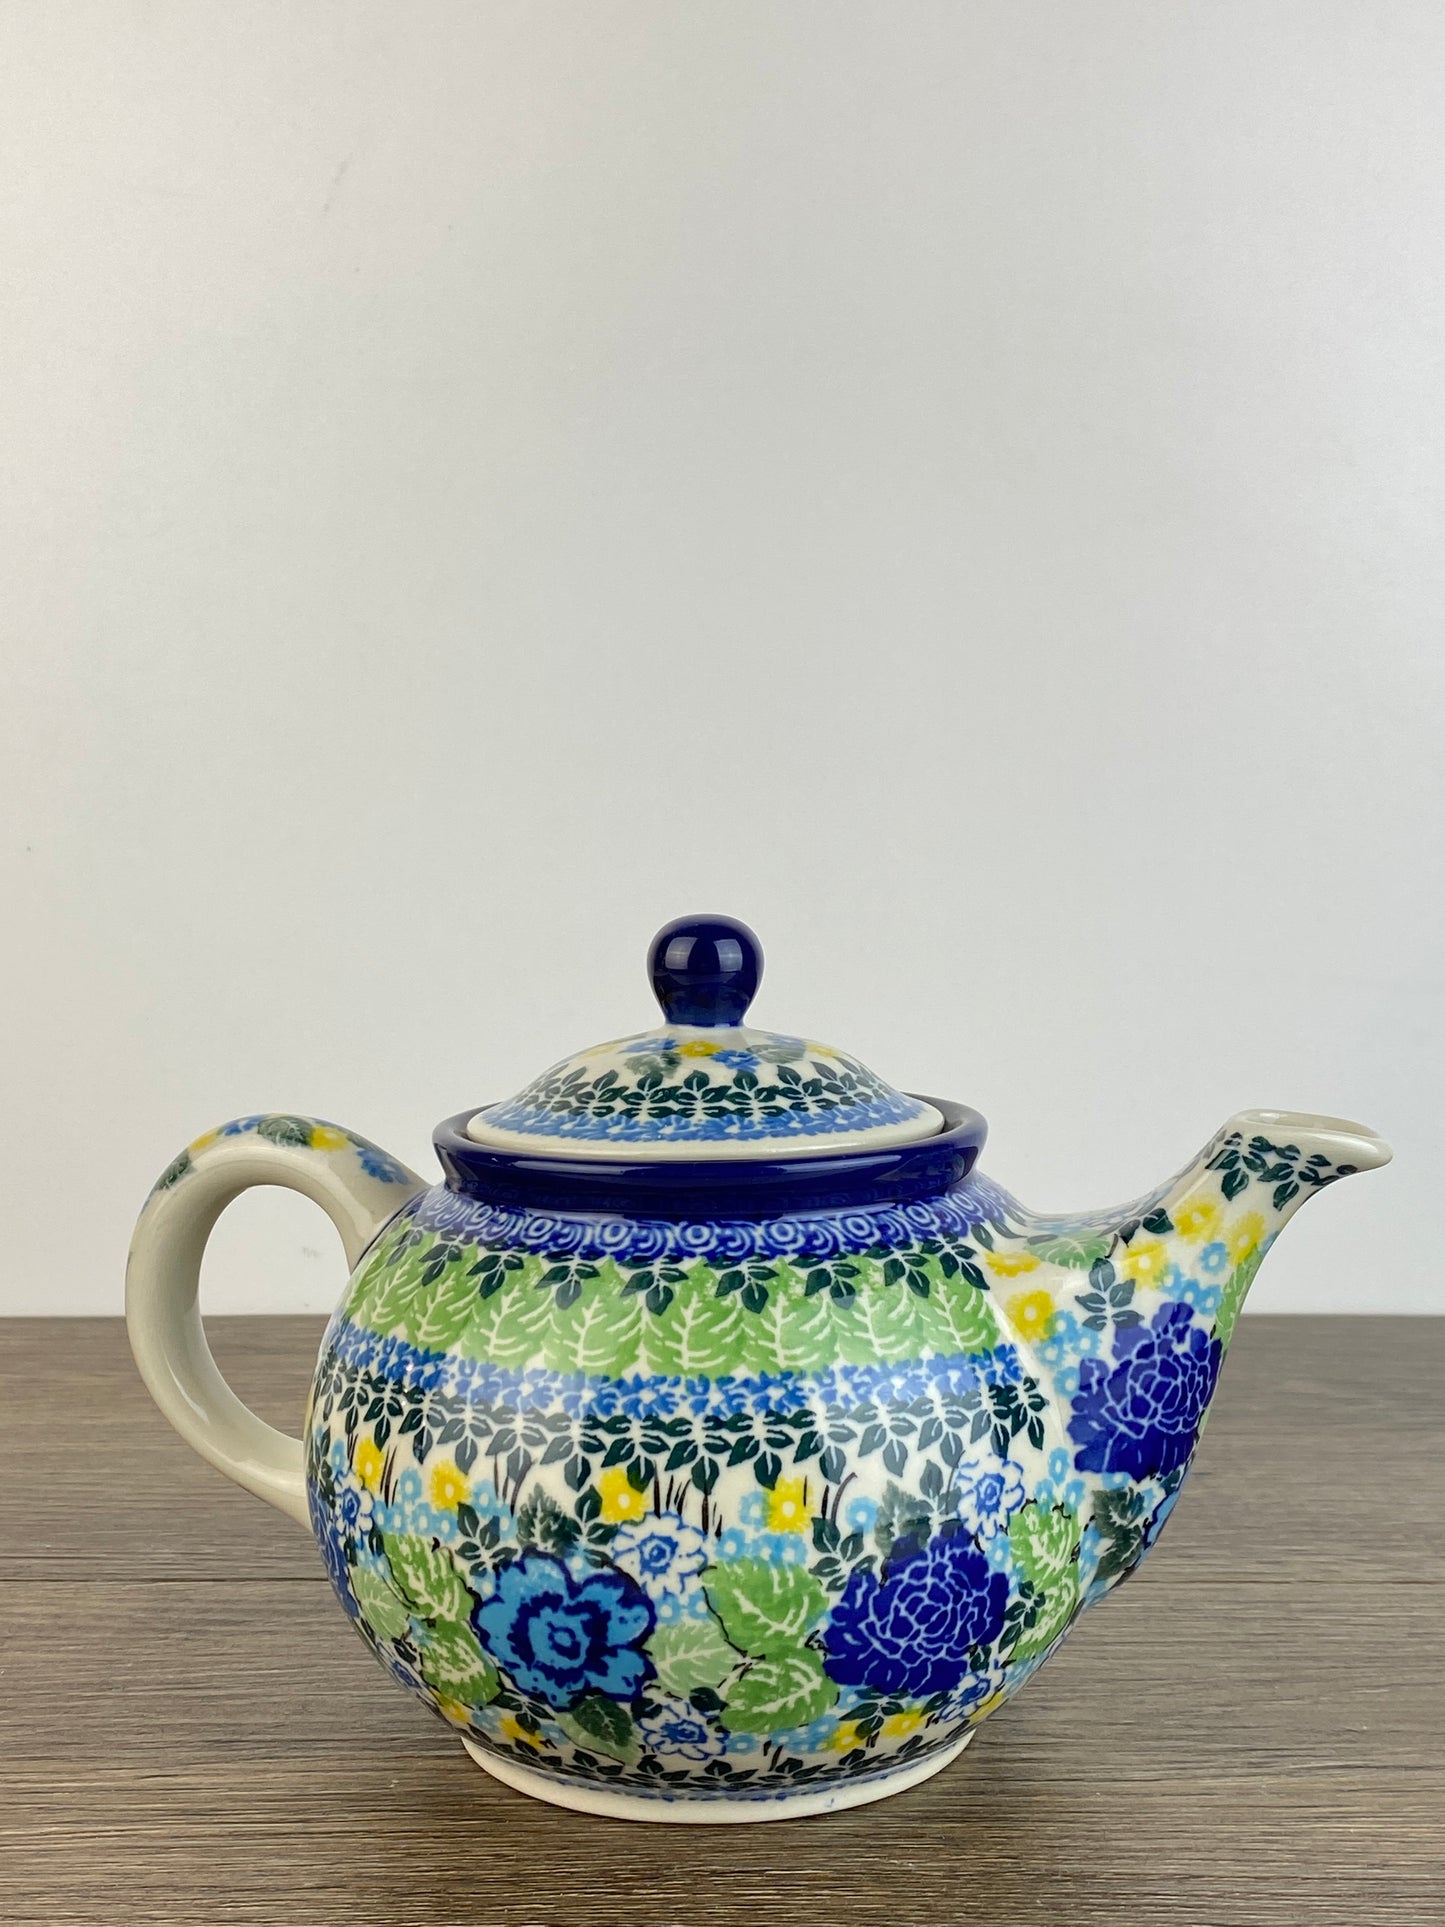 3 Cup Unikat Teapot - Shape 264 - Pattern U3677